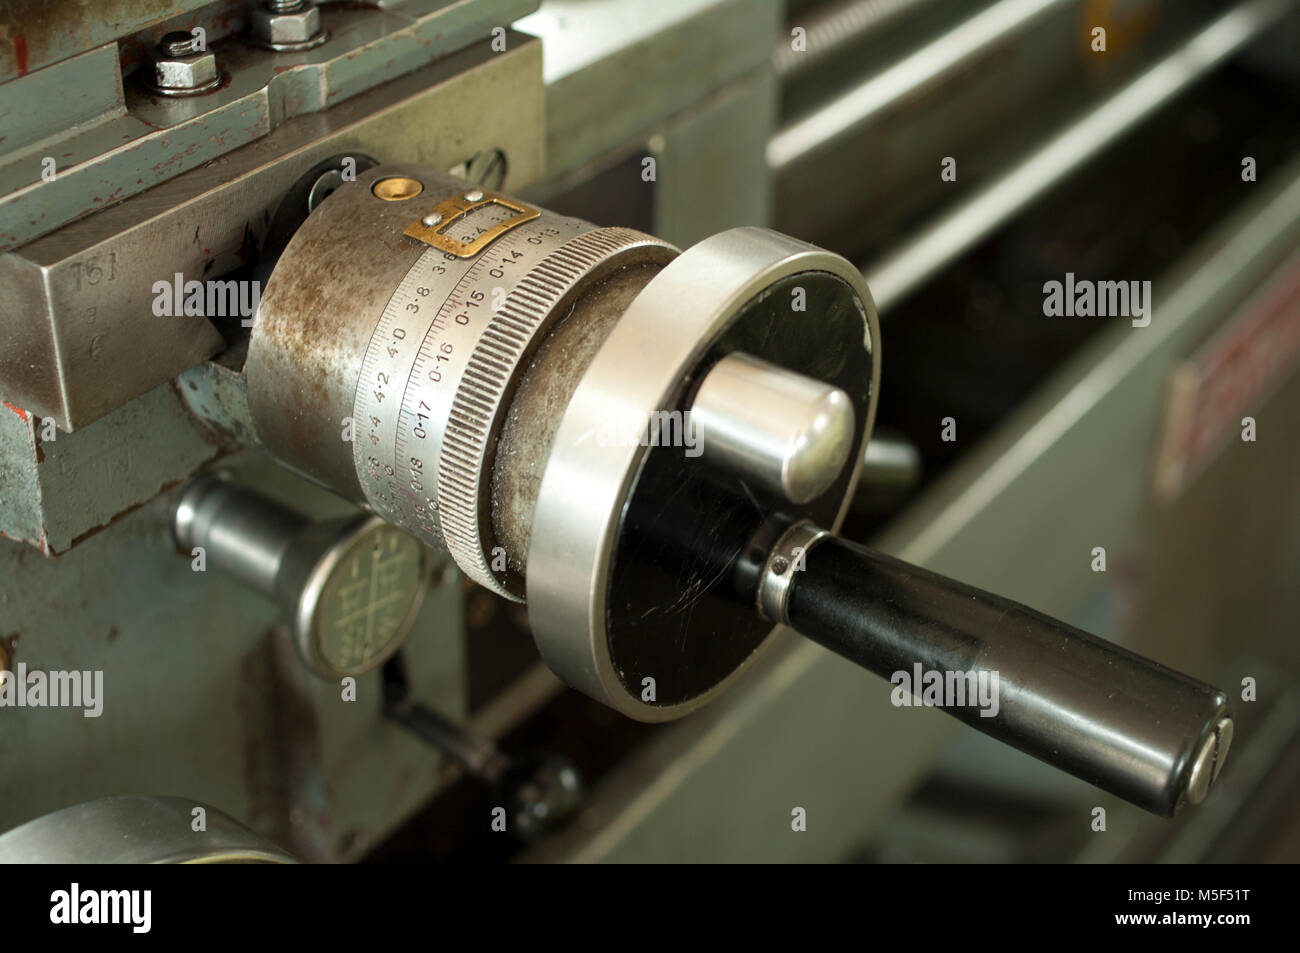 Cross feed handwheel on a lathe machine cross slide Stock Photo